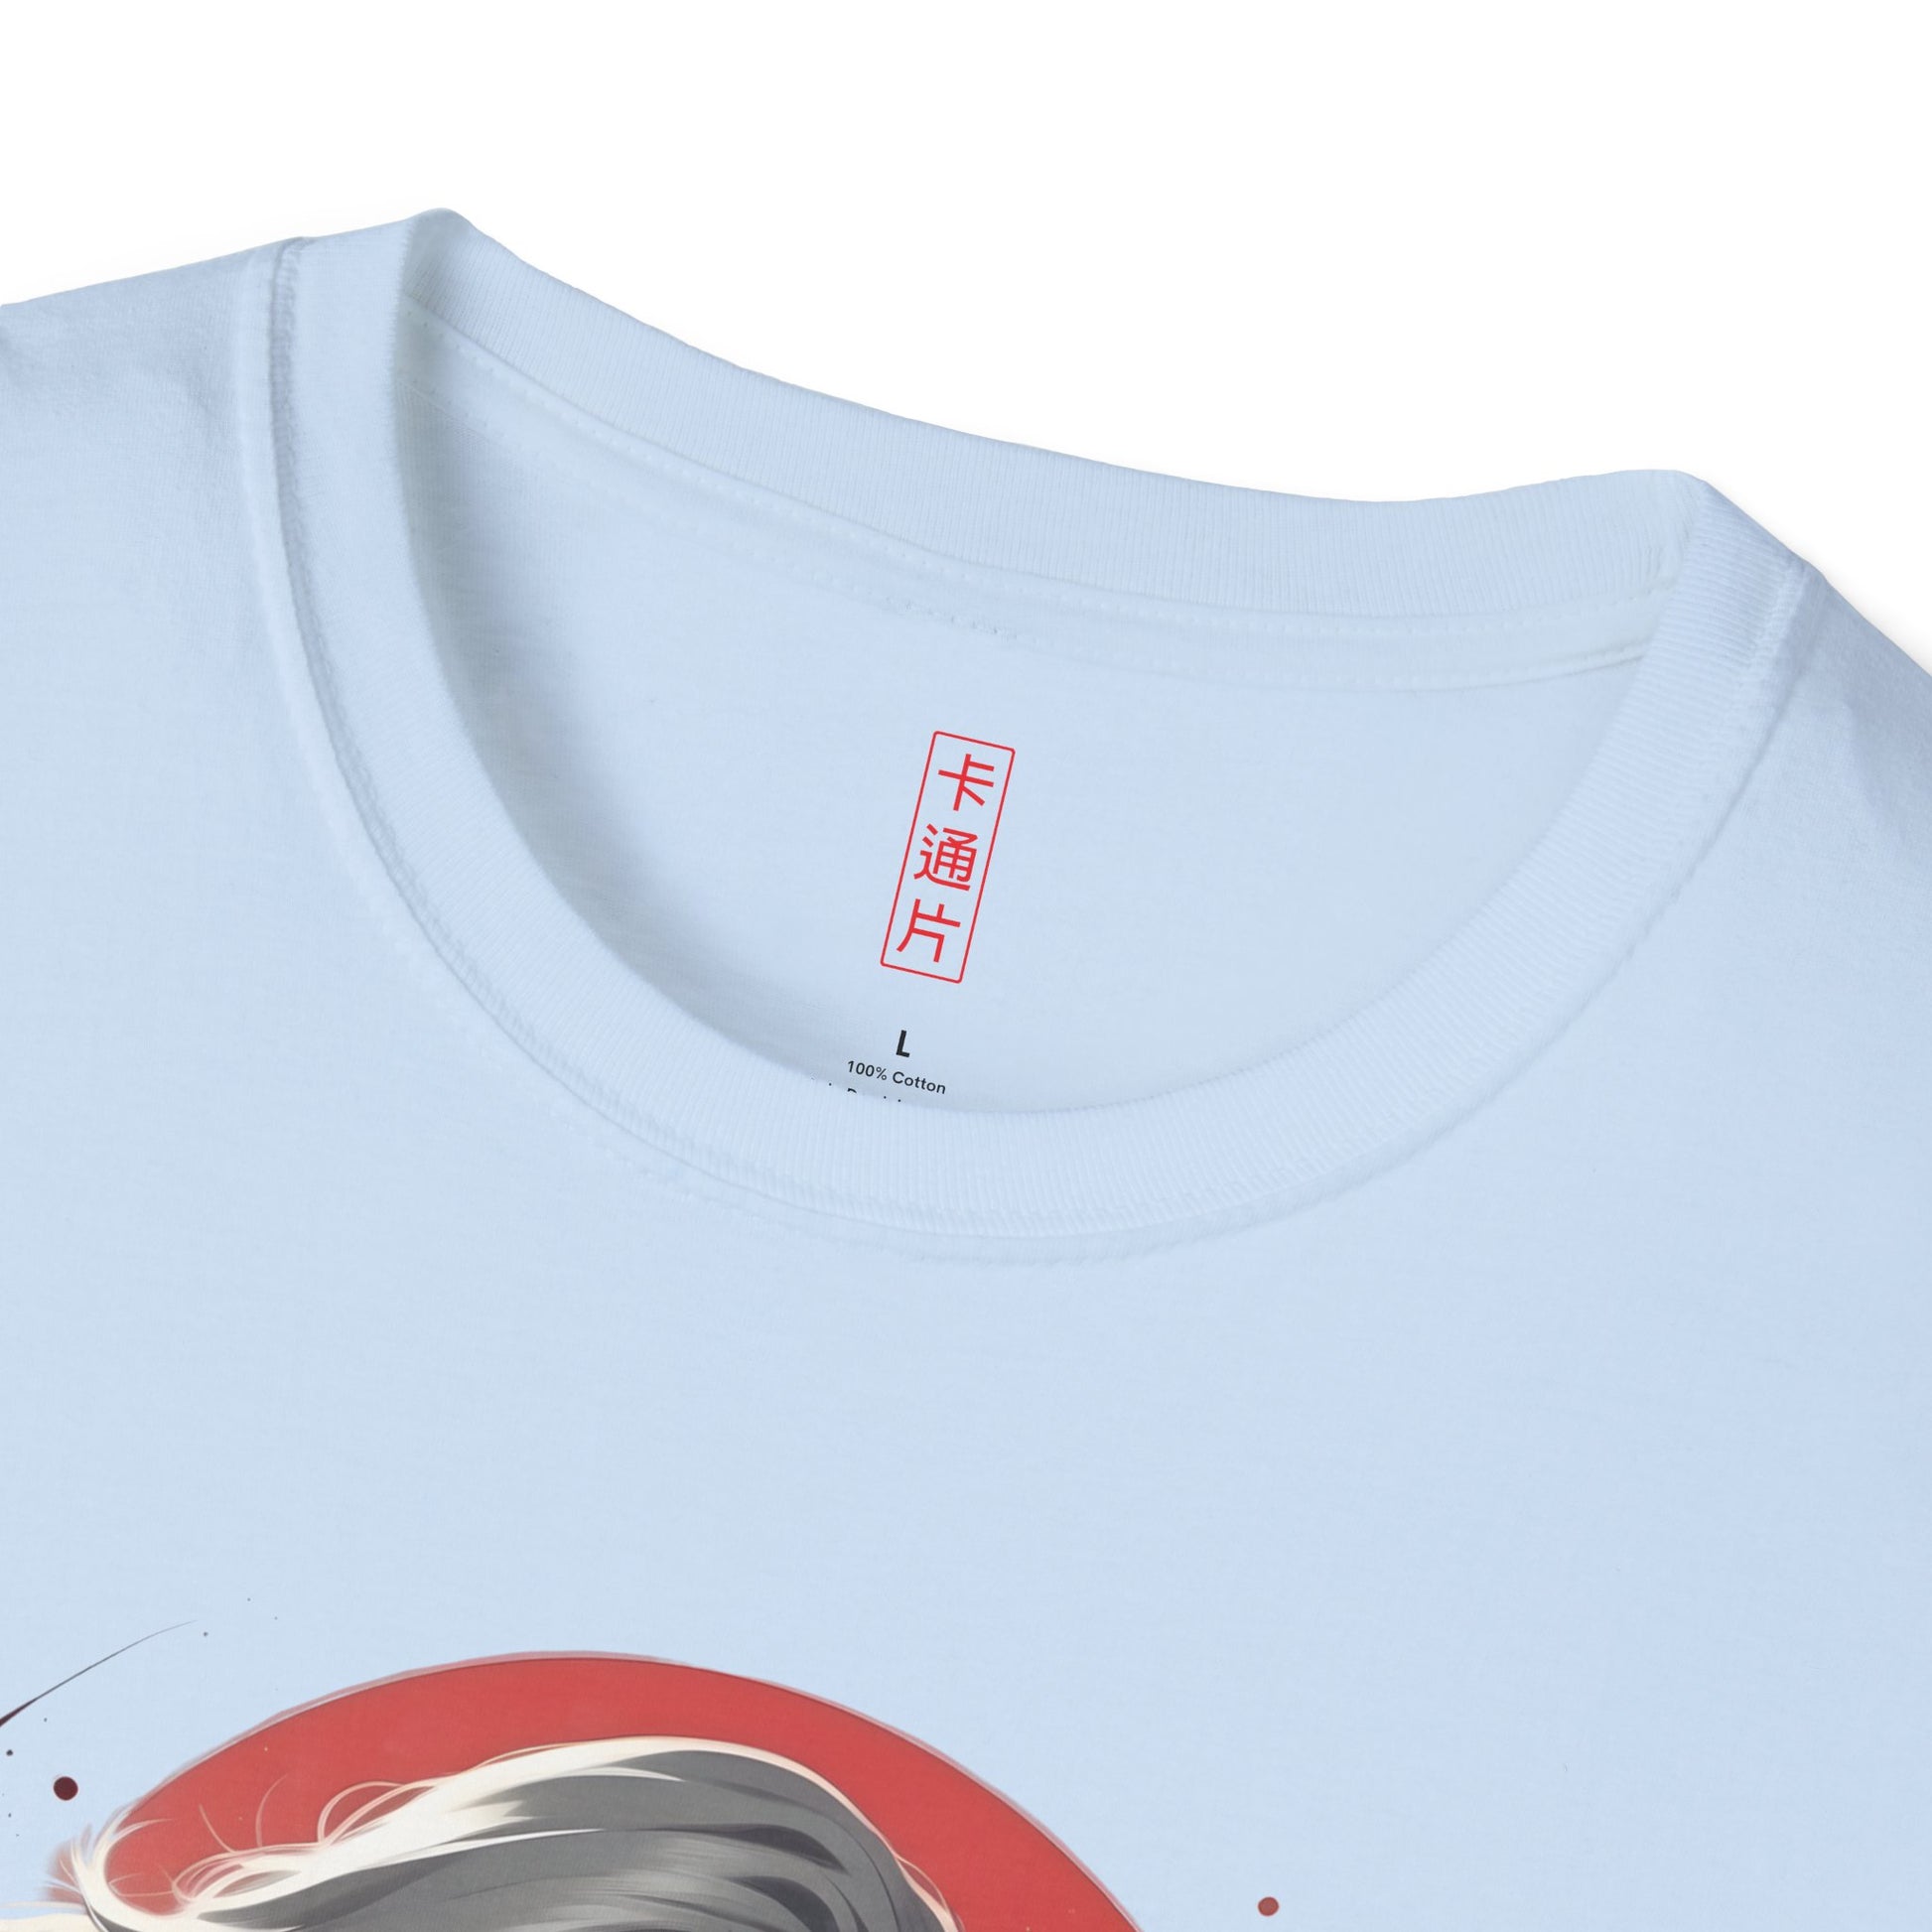 Kǎtōng Piàn - Vampires Collection - 006 - Unisex Softstyle T-Shirt Printify